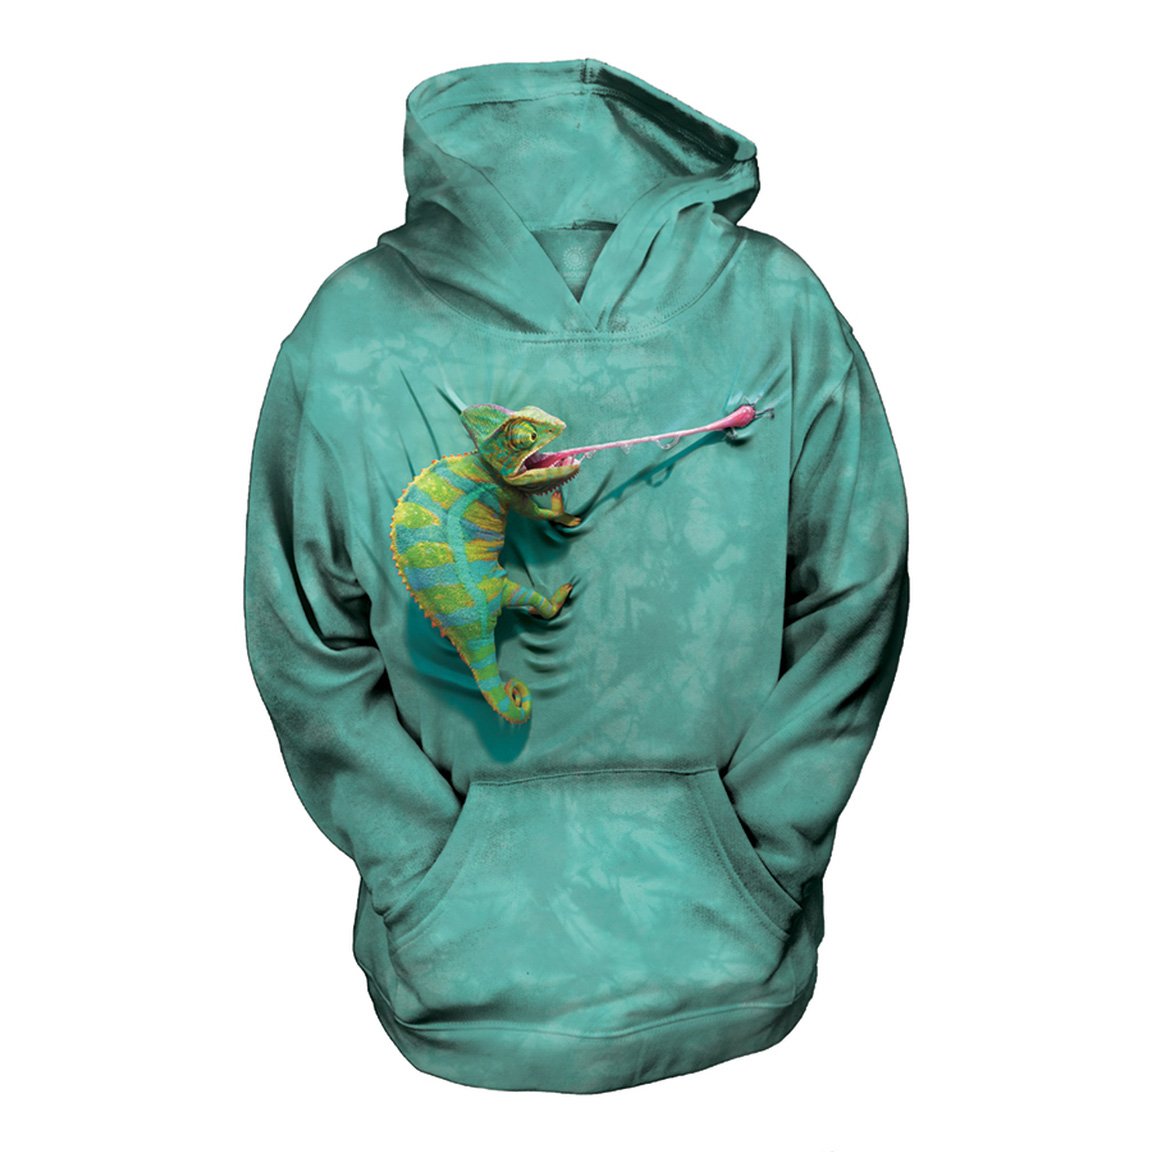 The Mountain Climbing Chameleon - Kid's Unisex Hoodie Sweatshirt